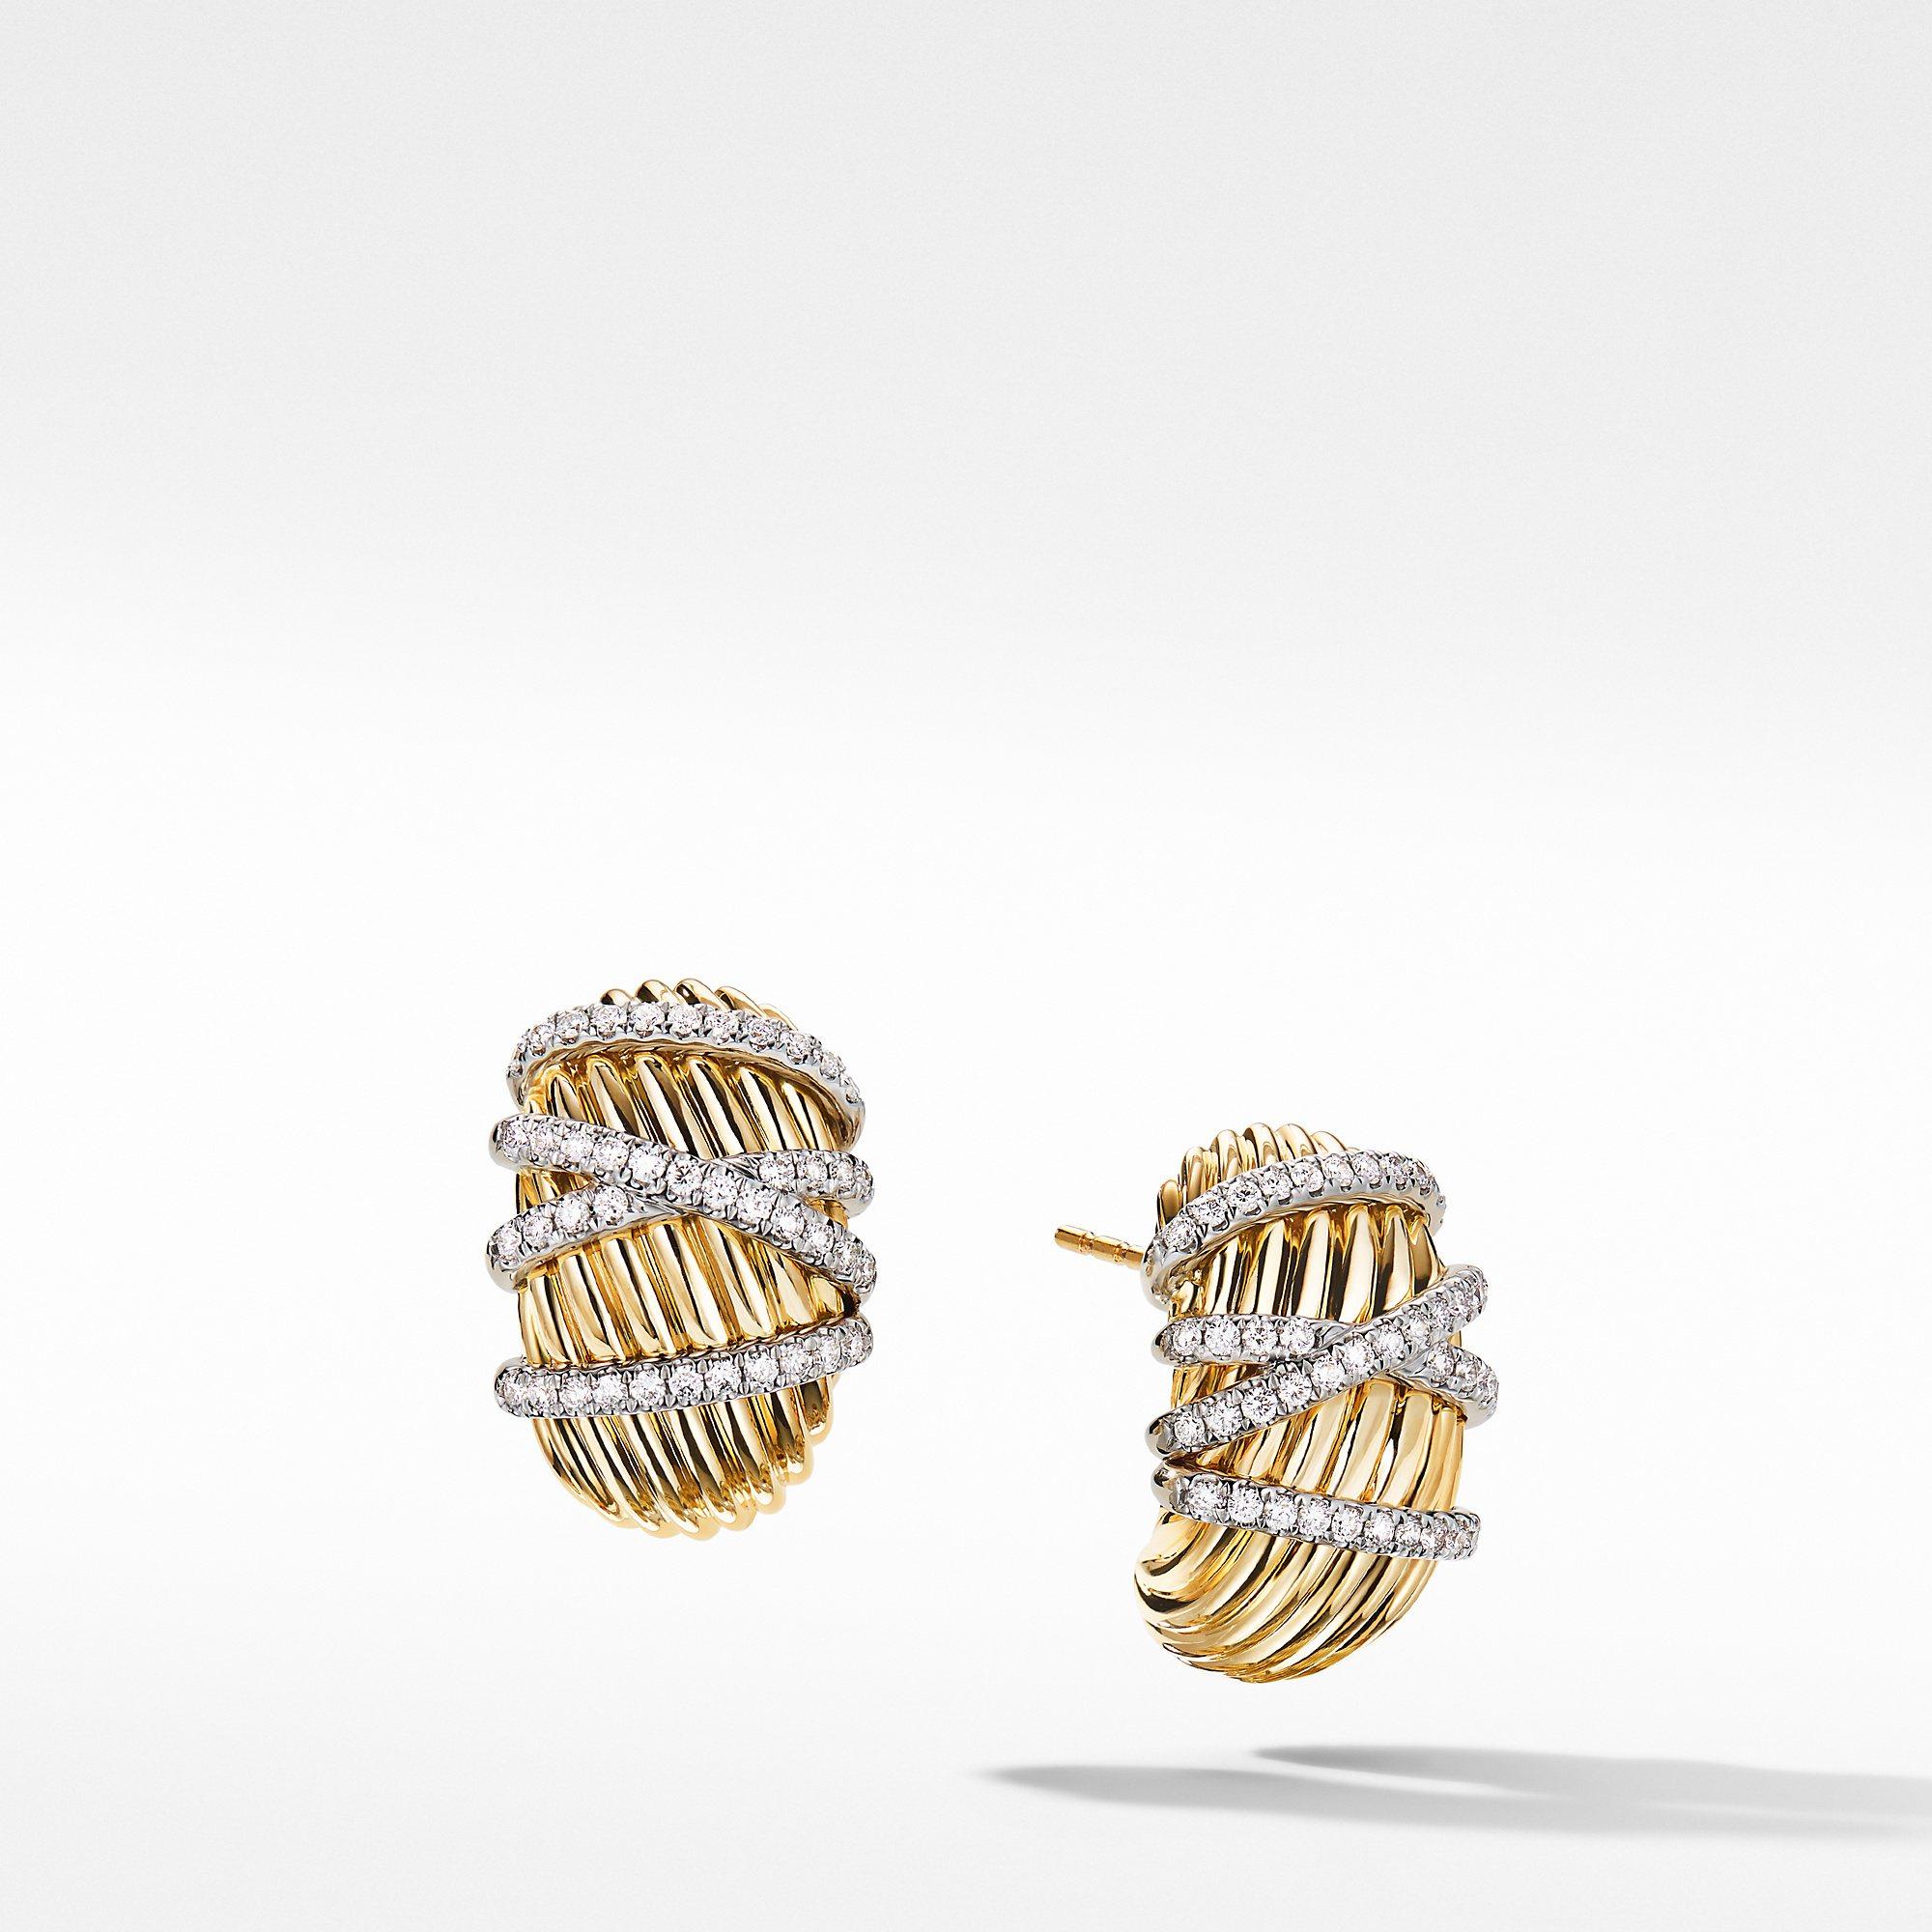 David Yurman Helena Shrimp Earrings in 18k Yellow Gold with Diamonds